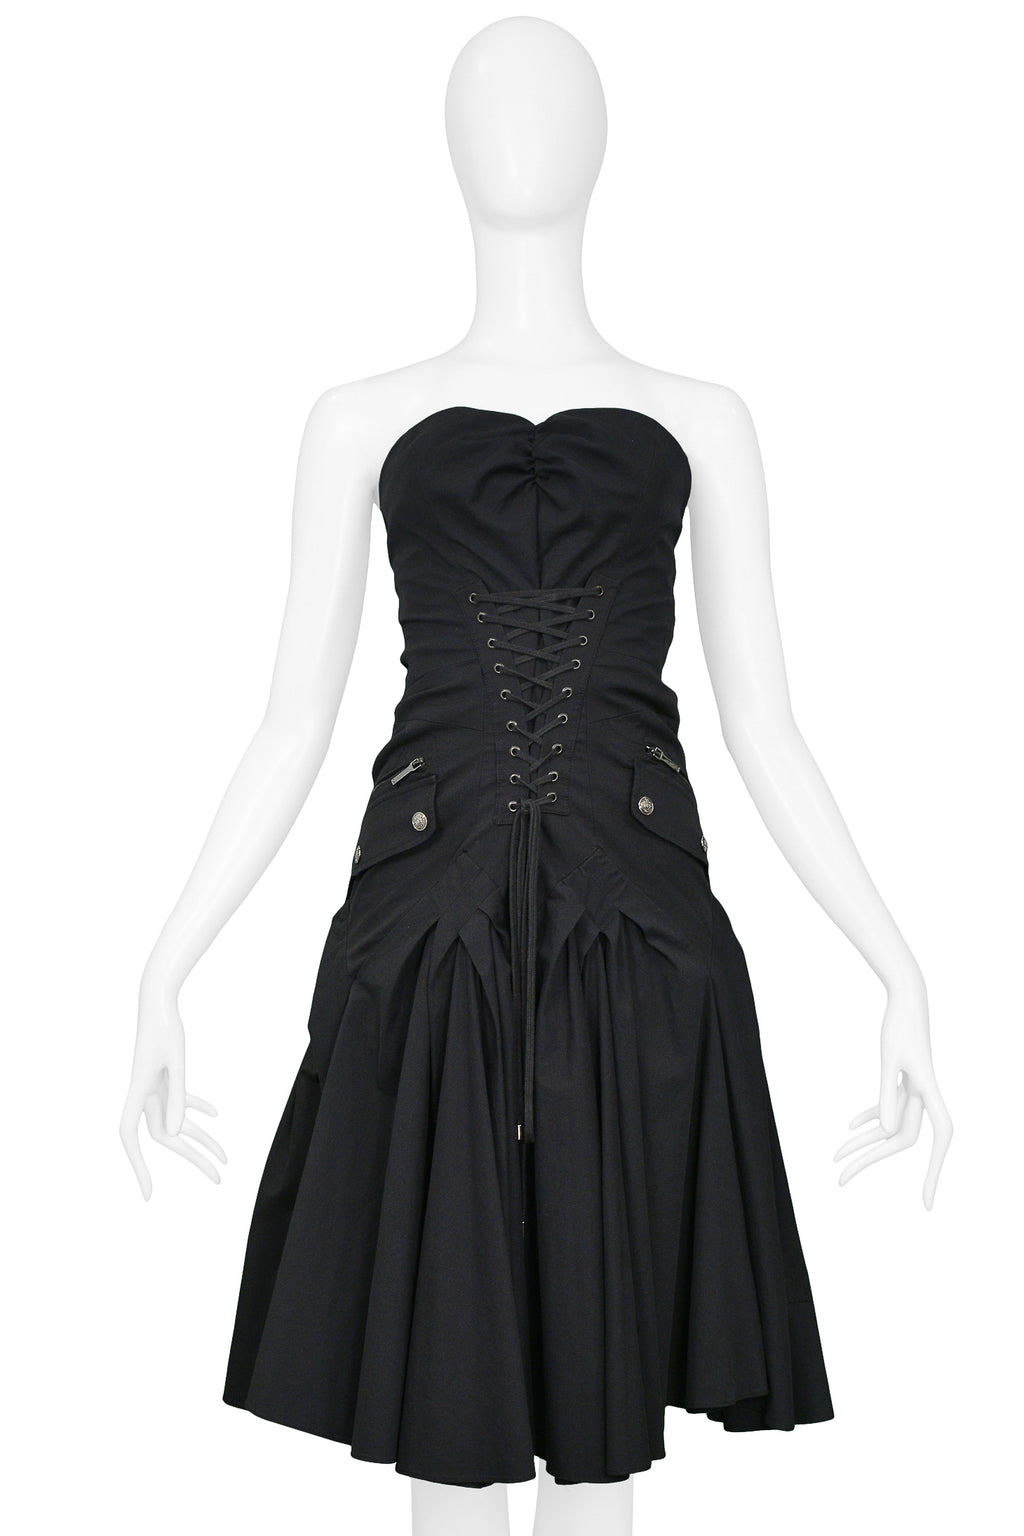 Christian Dior Vintage Garden Printed Corset Dress FR38 RARE  eBay